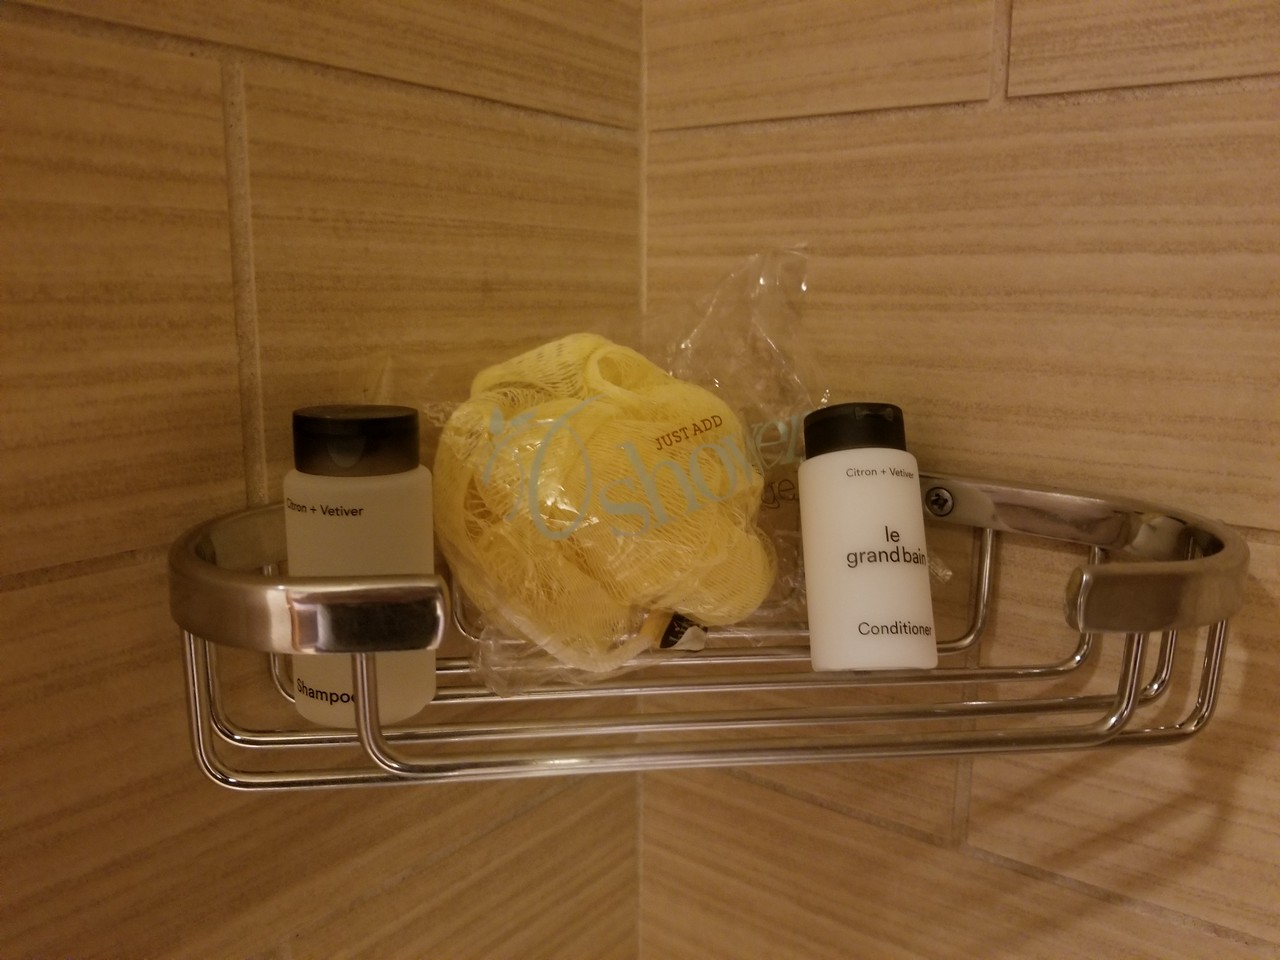 a shower accessories on a shelf